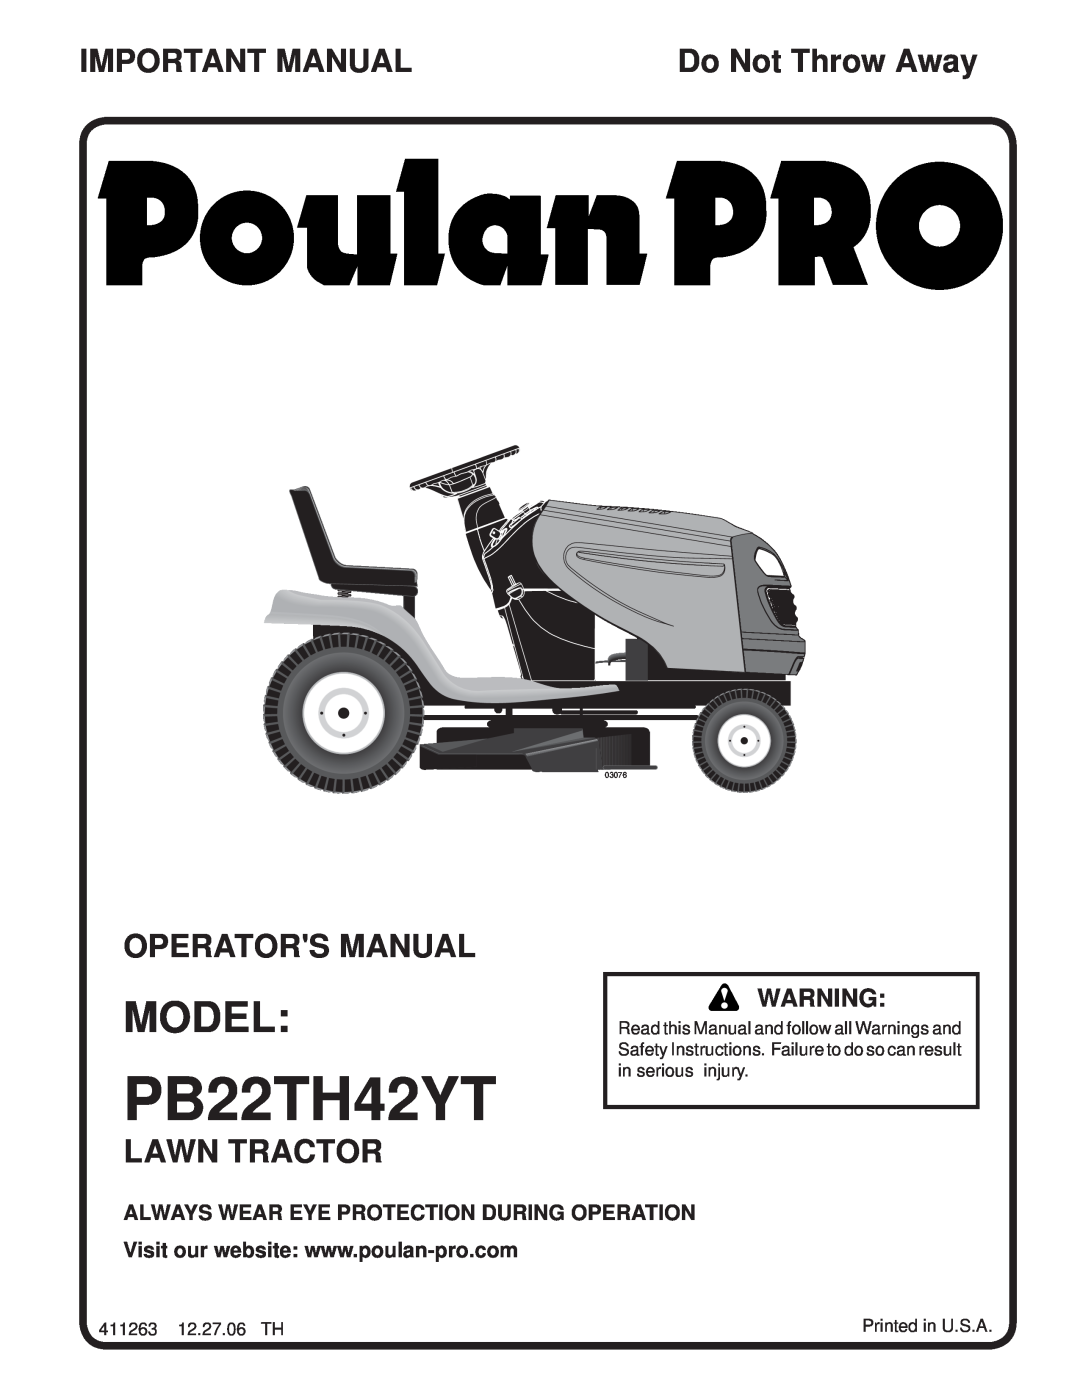 Poulan PB22TH42YT manual Model, Important Manual, Operators Manual, Lawn Tractor, Do Not Throw Away, 03076 